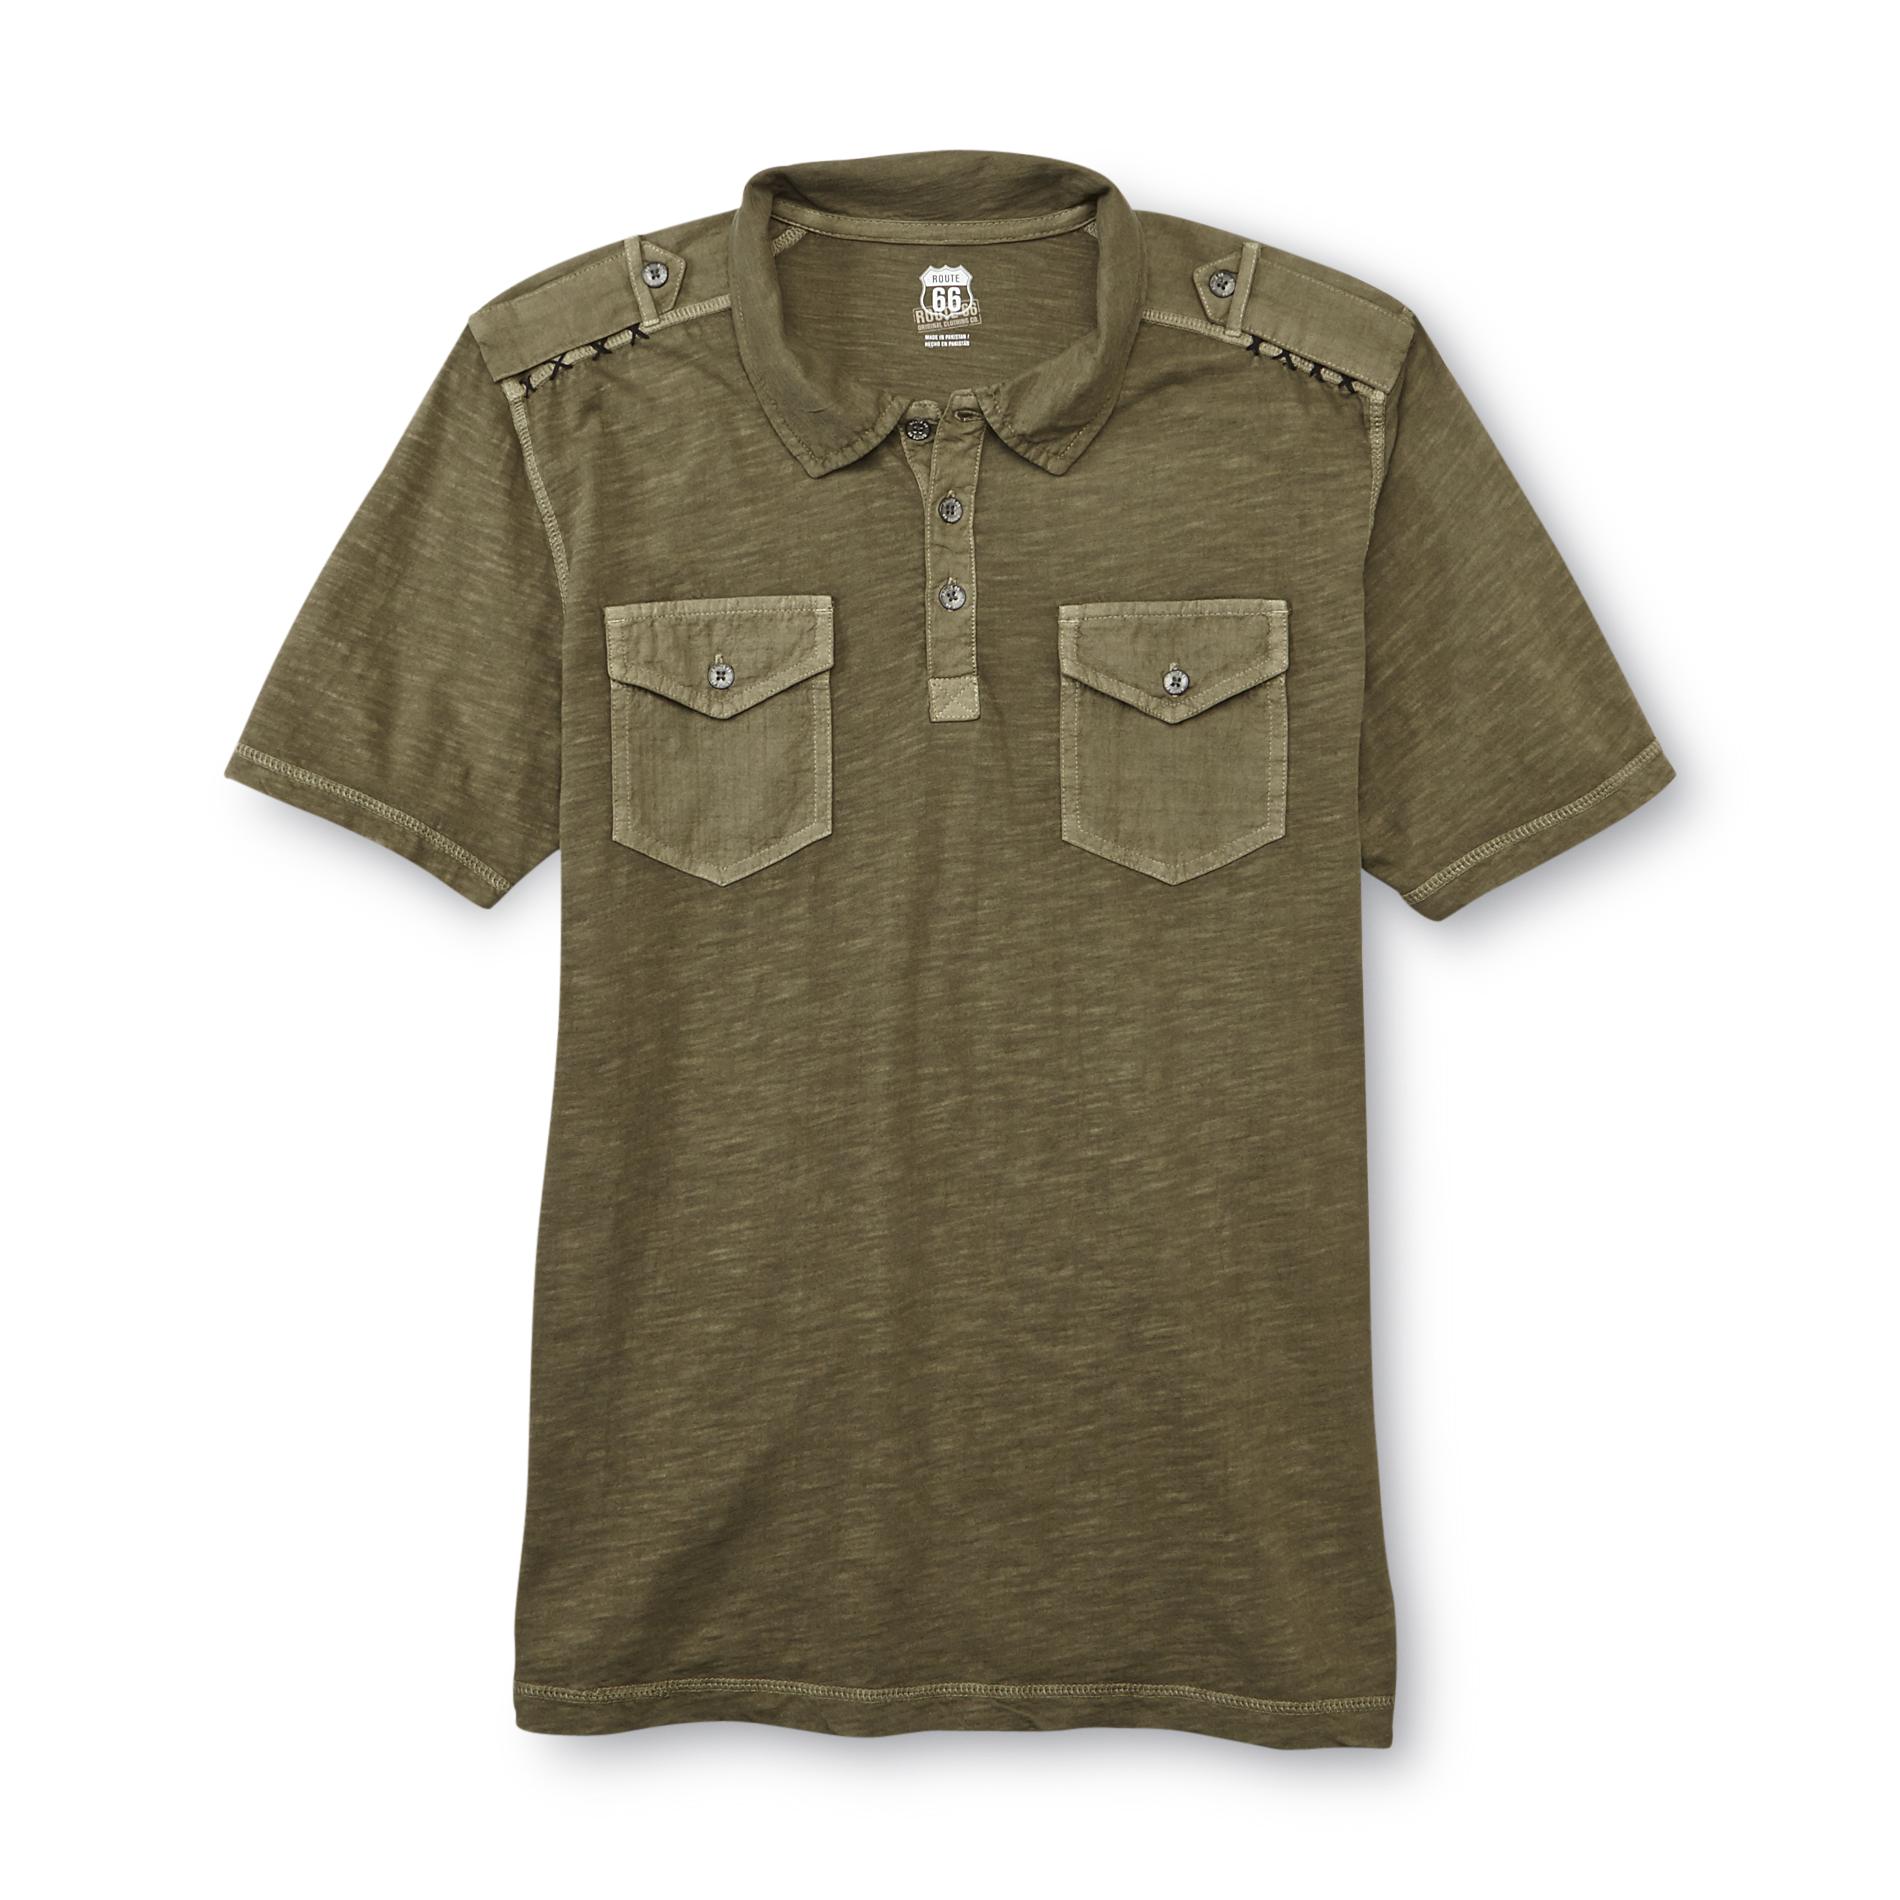 Route 66 Men's Short-Sleeve Shirt